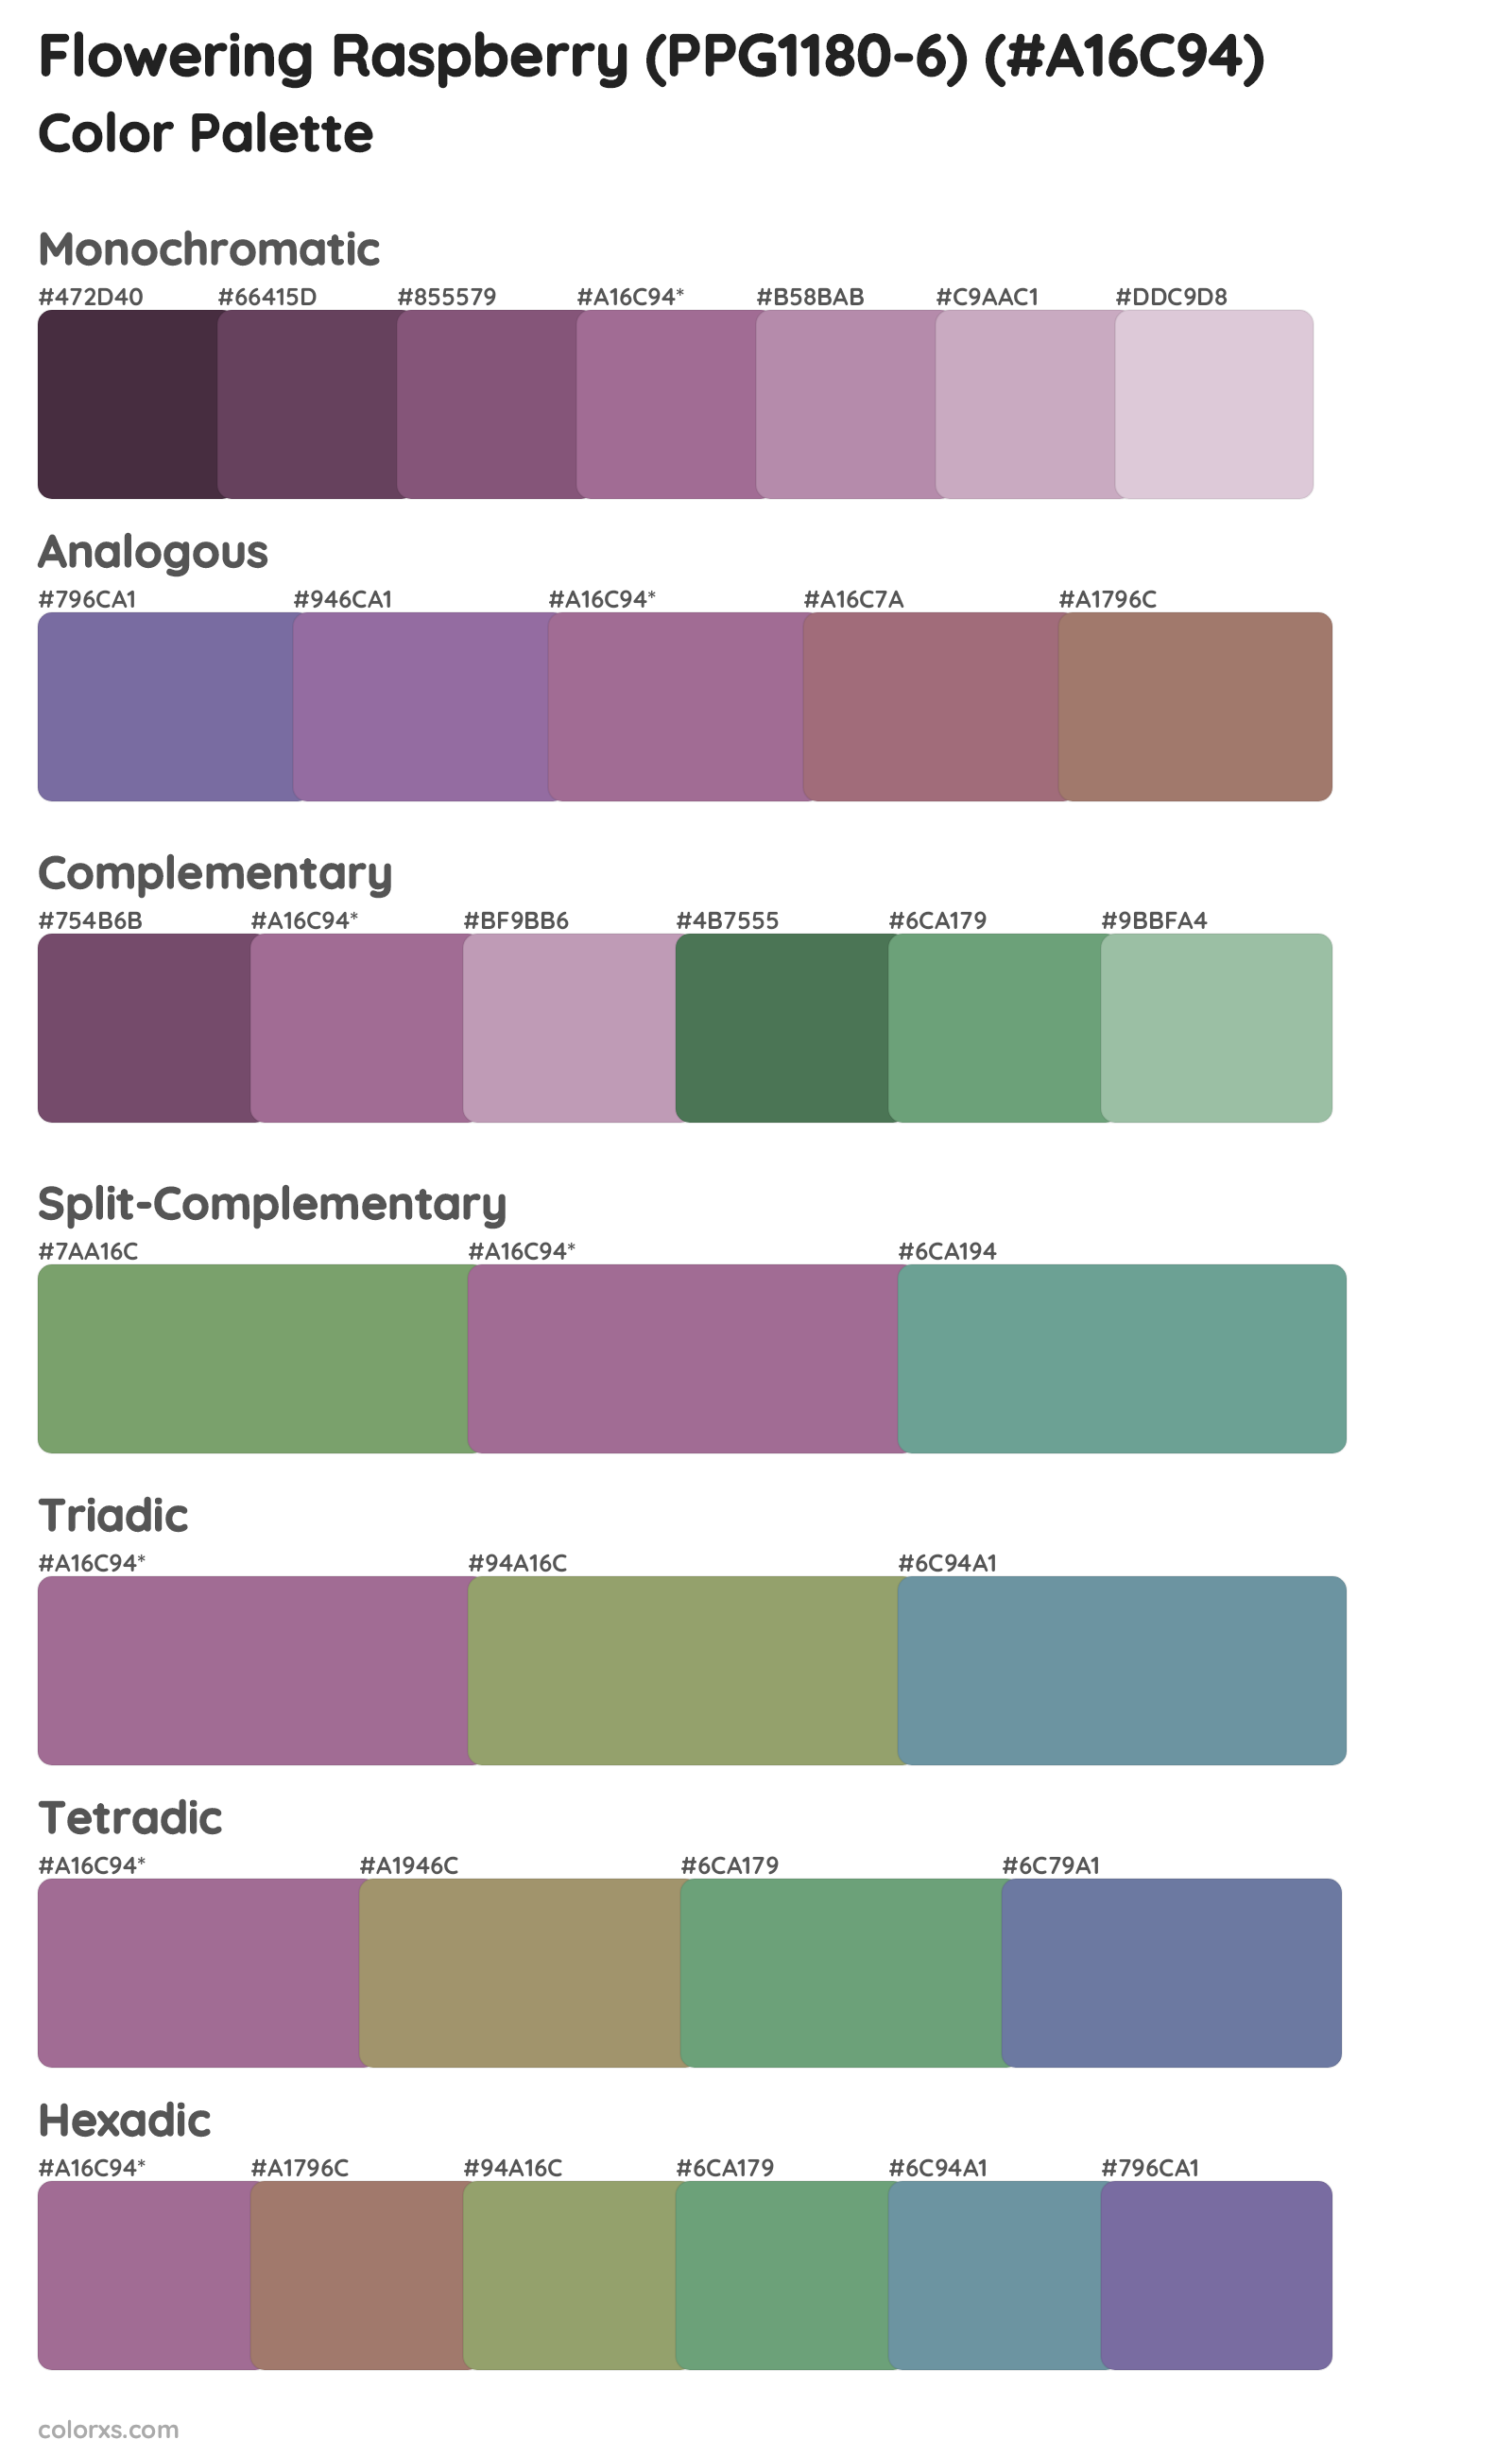 Flowering Raspberry (PPG1180-6) Color Scheme Palettes